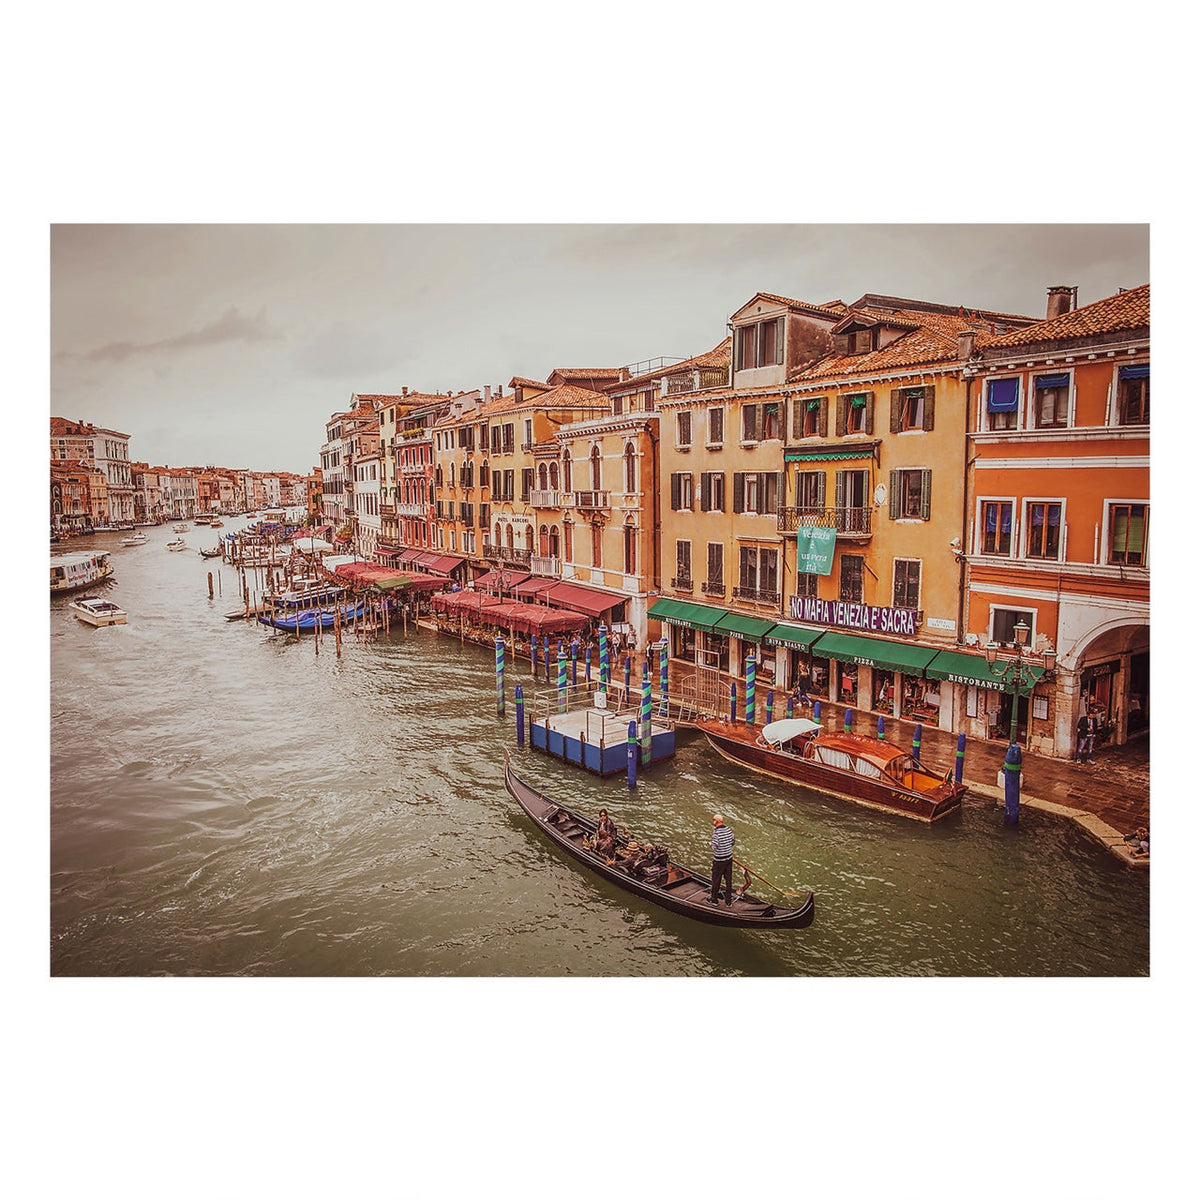 Fine Art Prints - "View From The Rialto Bridge" | Italy Photography Print